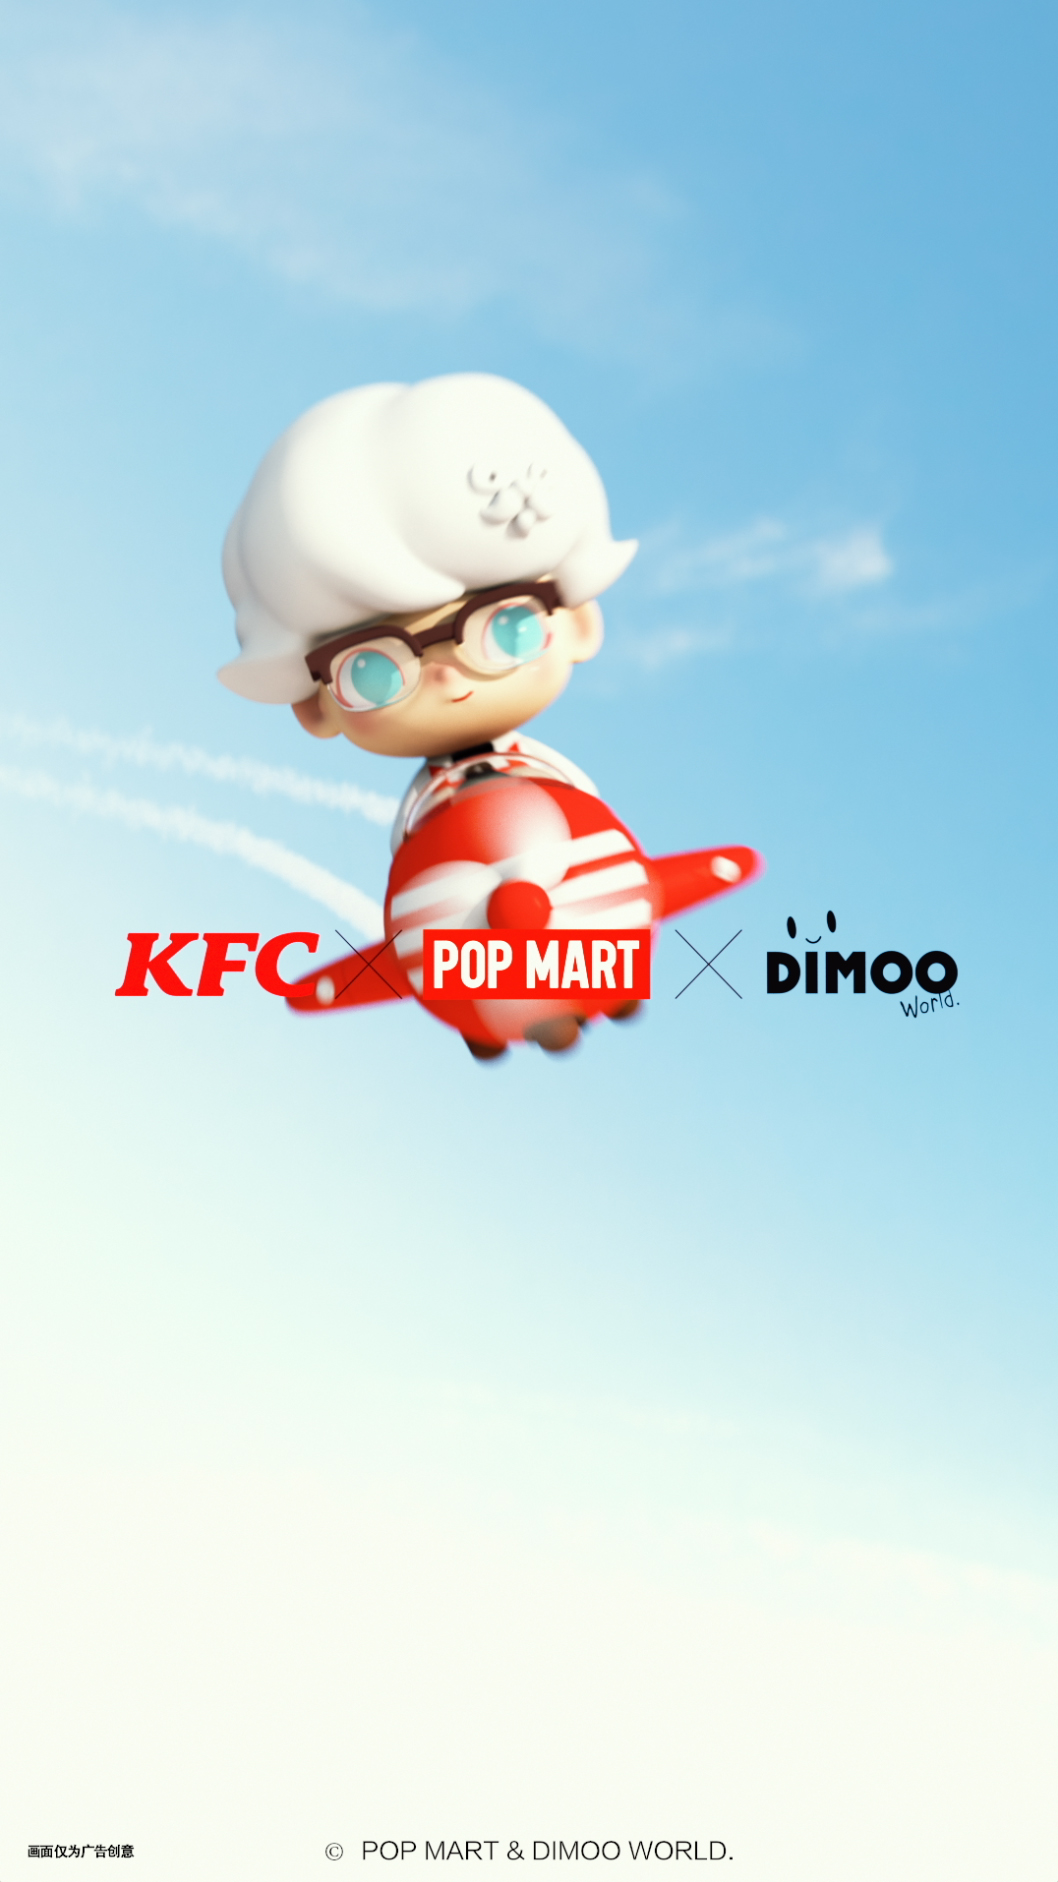 KFC_Dimoo_1